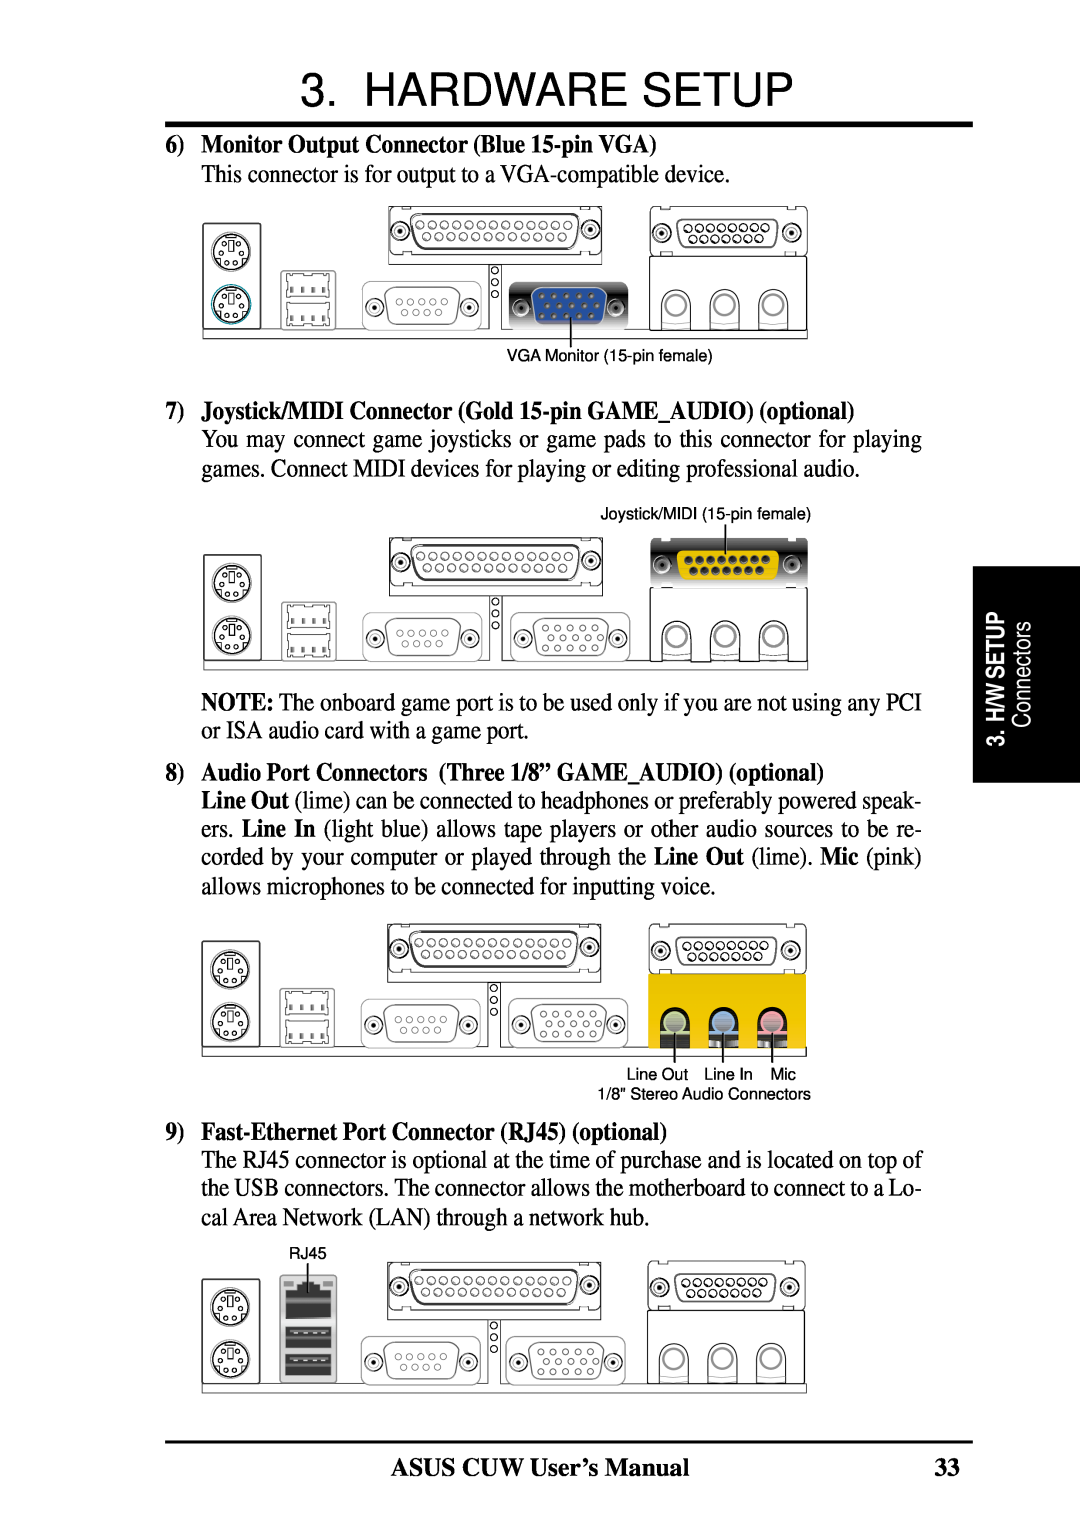 Asus 810 Monitor Output Connector Blue 15-pin VGA, Joystick/MIDI Connector Gold 15-pin GAMEAUDIO optional, Hardware Setup 